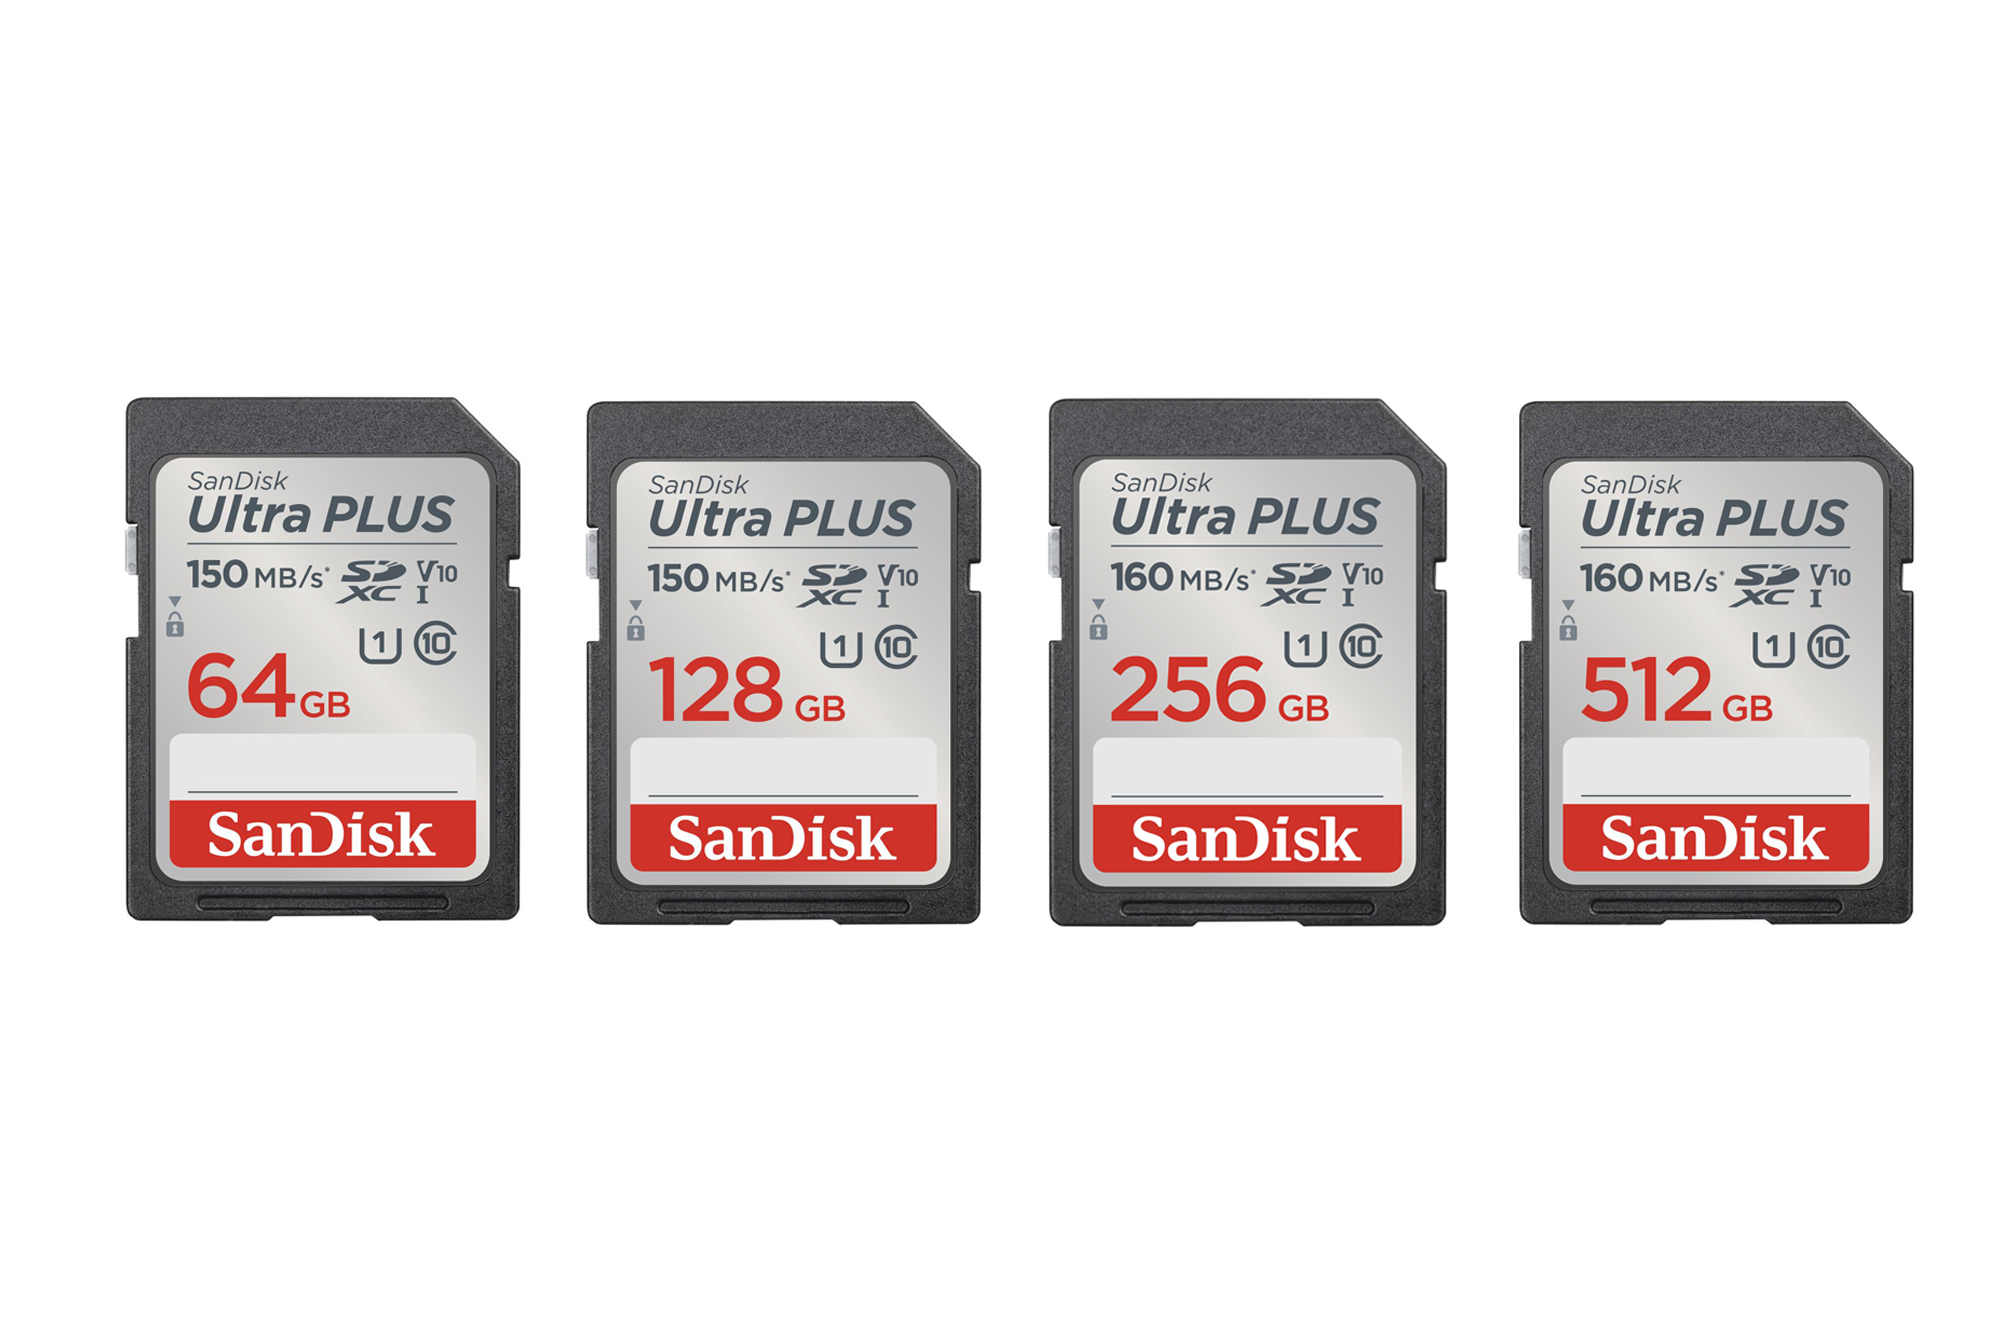 Sandisk Extreme PLUS Ultra PLUS 64GB Set